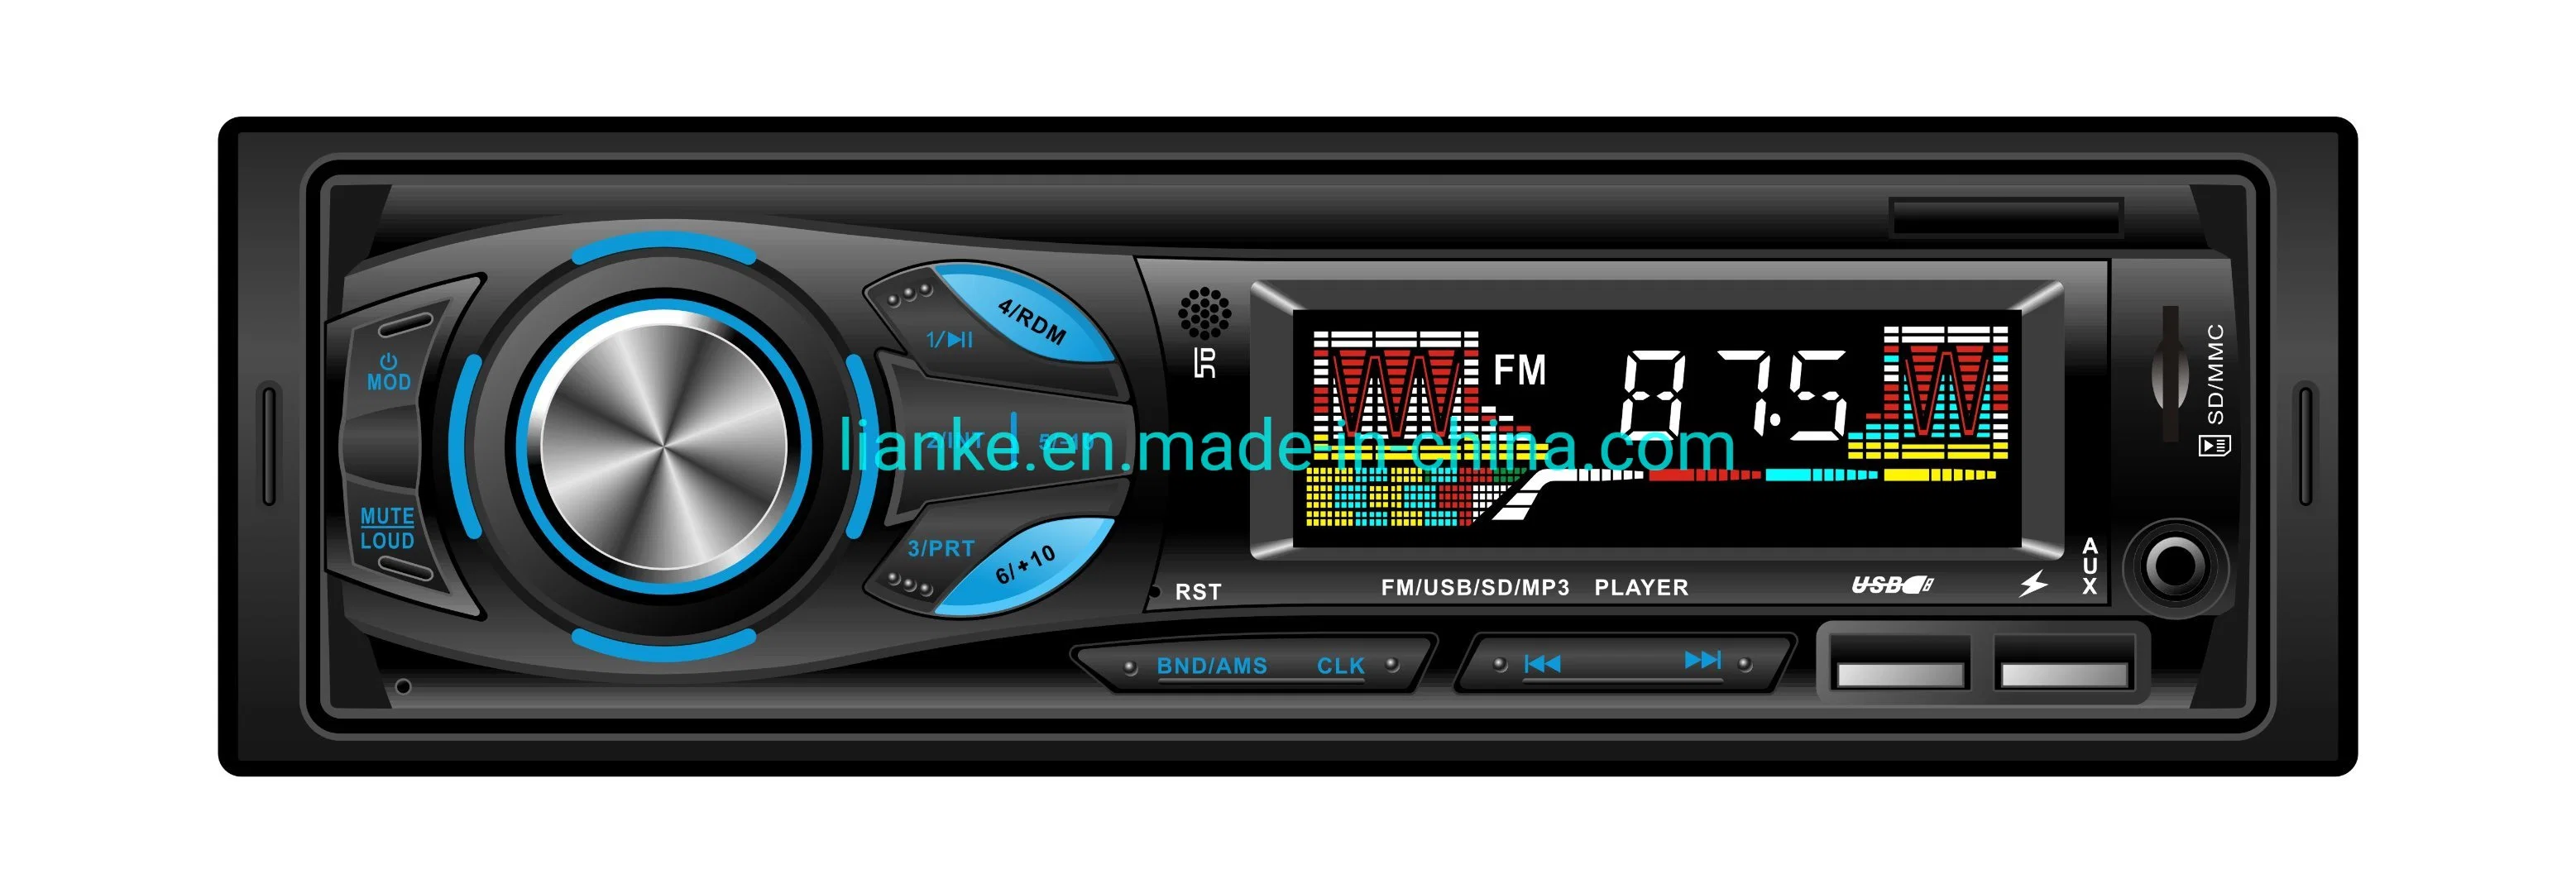 Alquiler de audio de MP3 Reproductor Multimedia con FM/USB